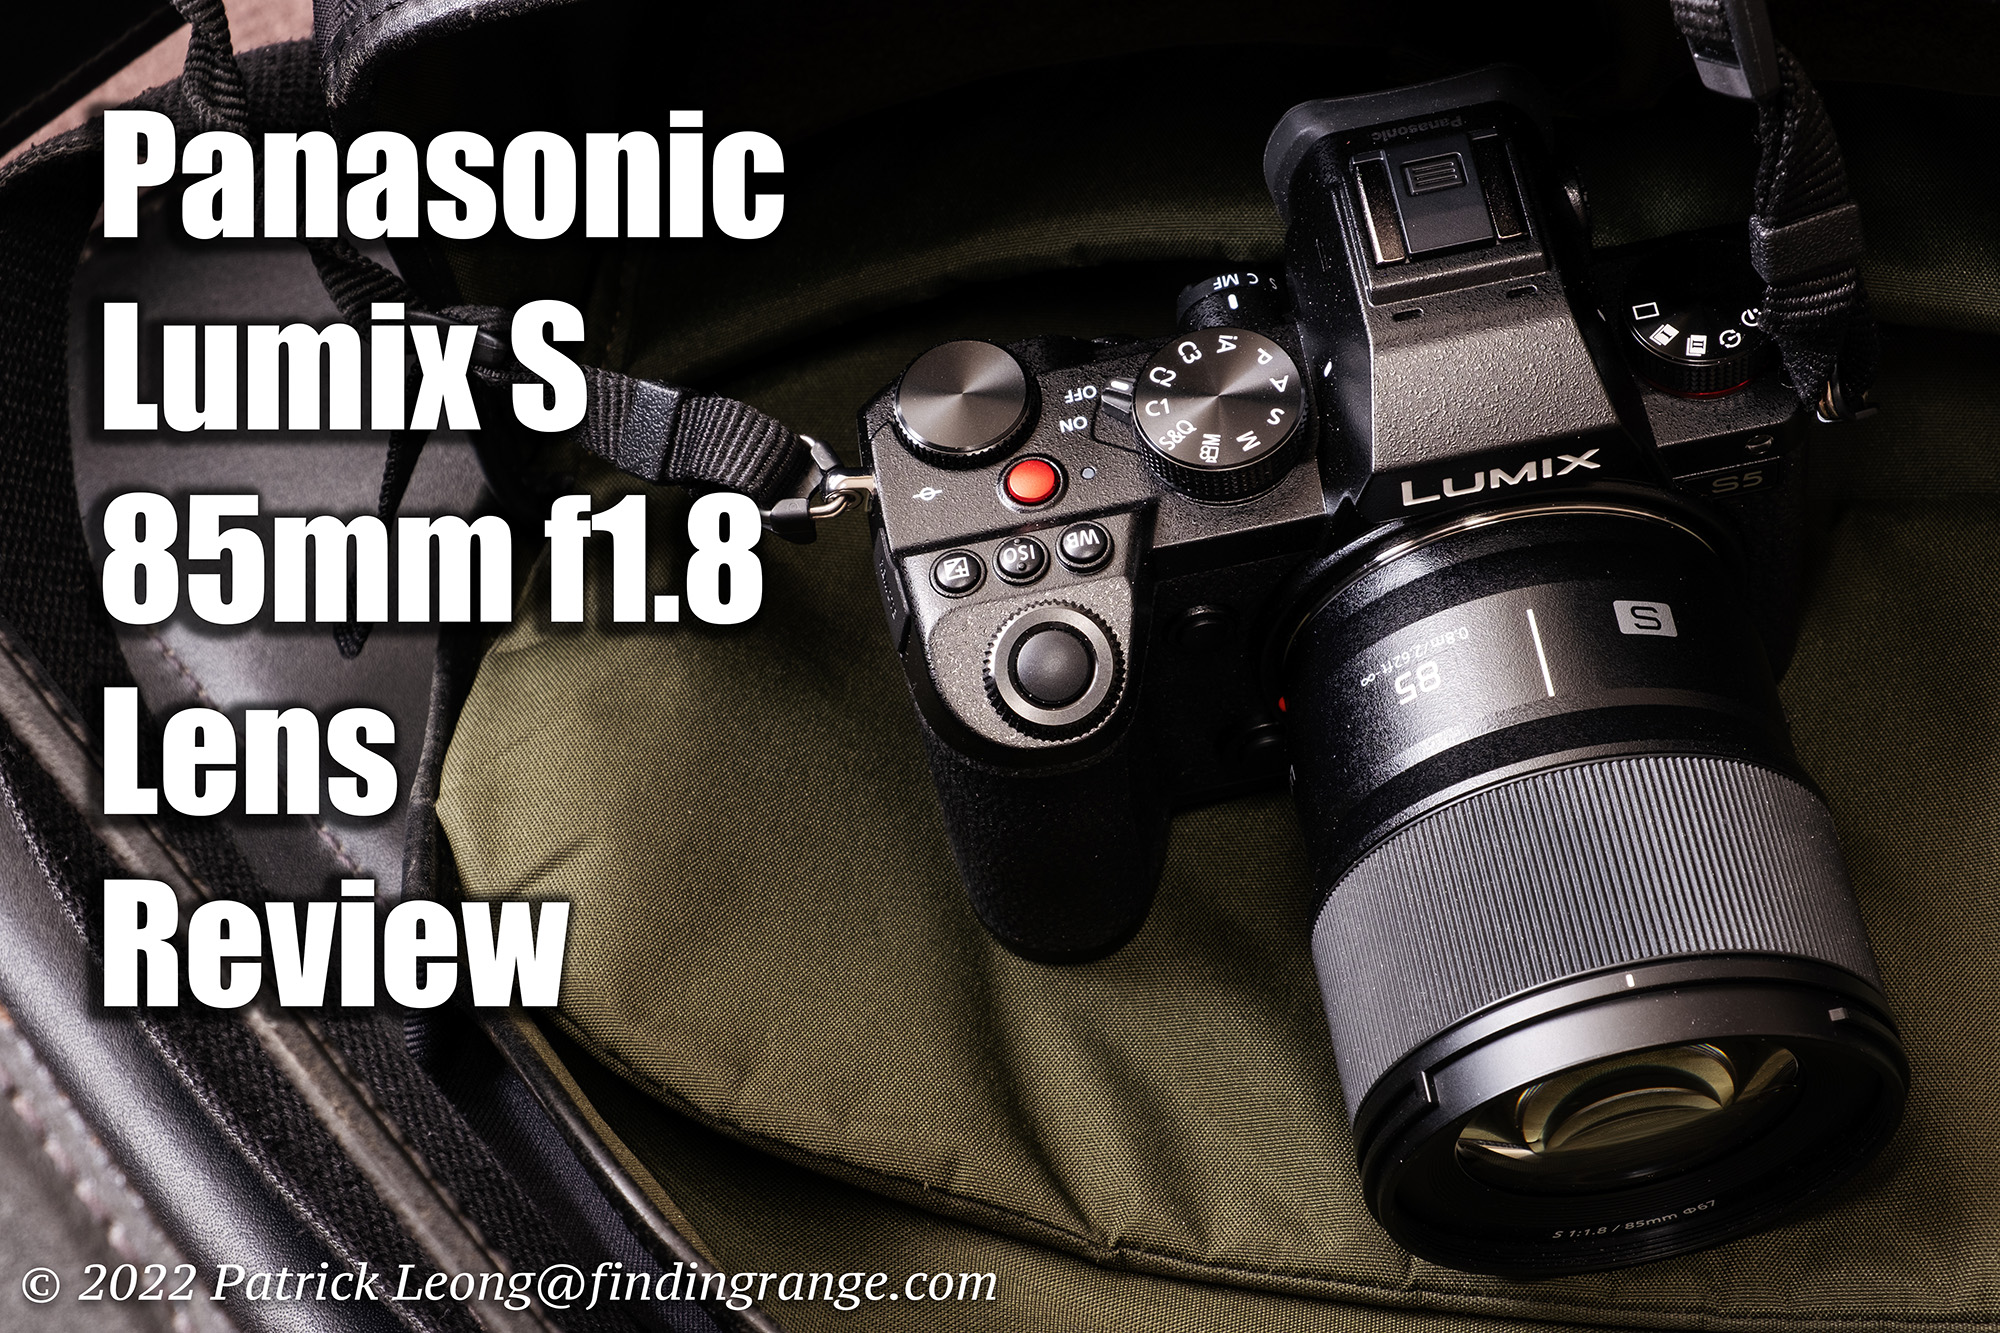 Panasonic Lumix S 85mm f1.8 Lens Review - Finding Range